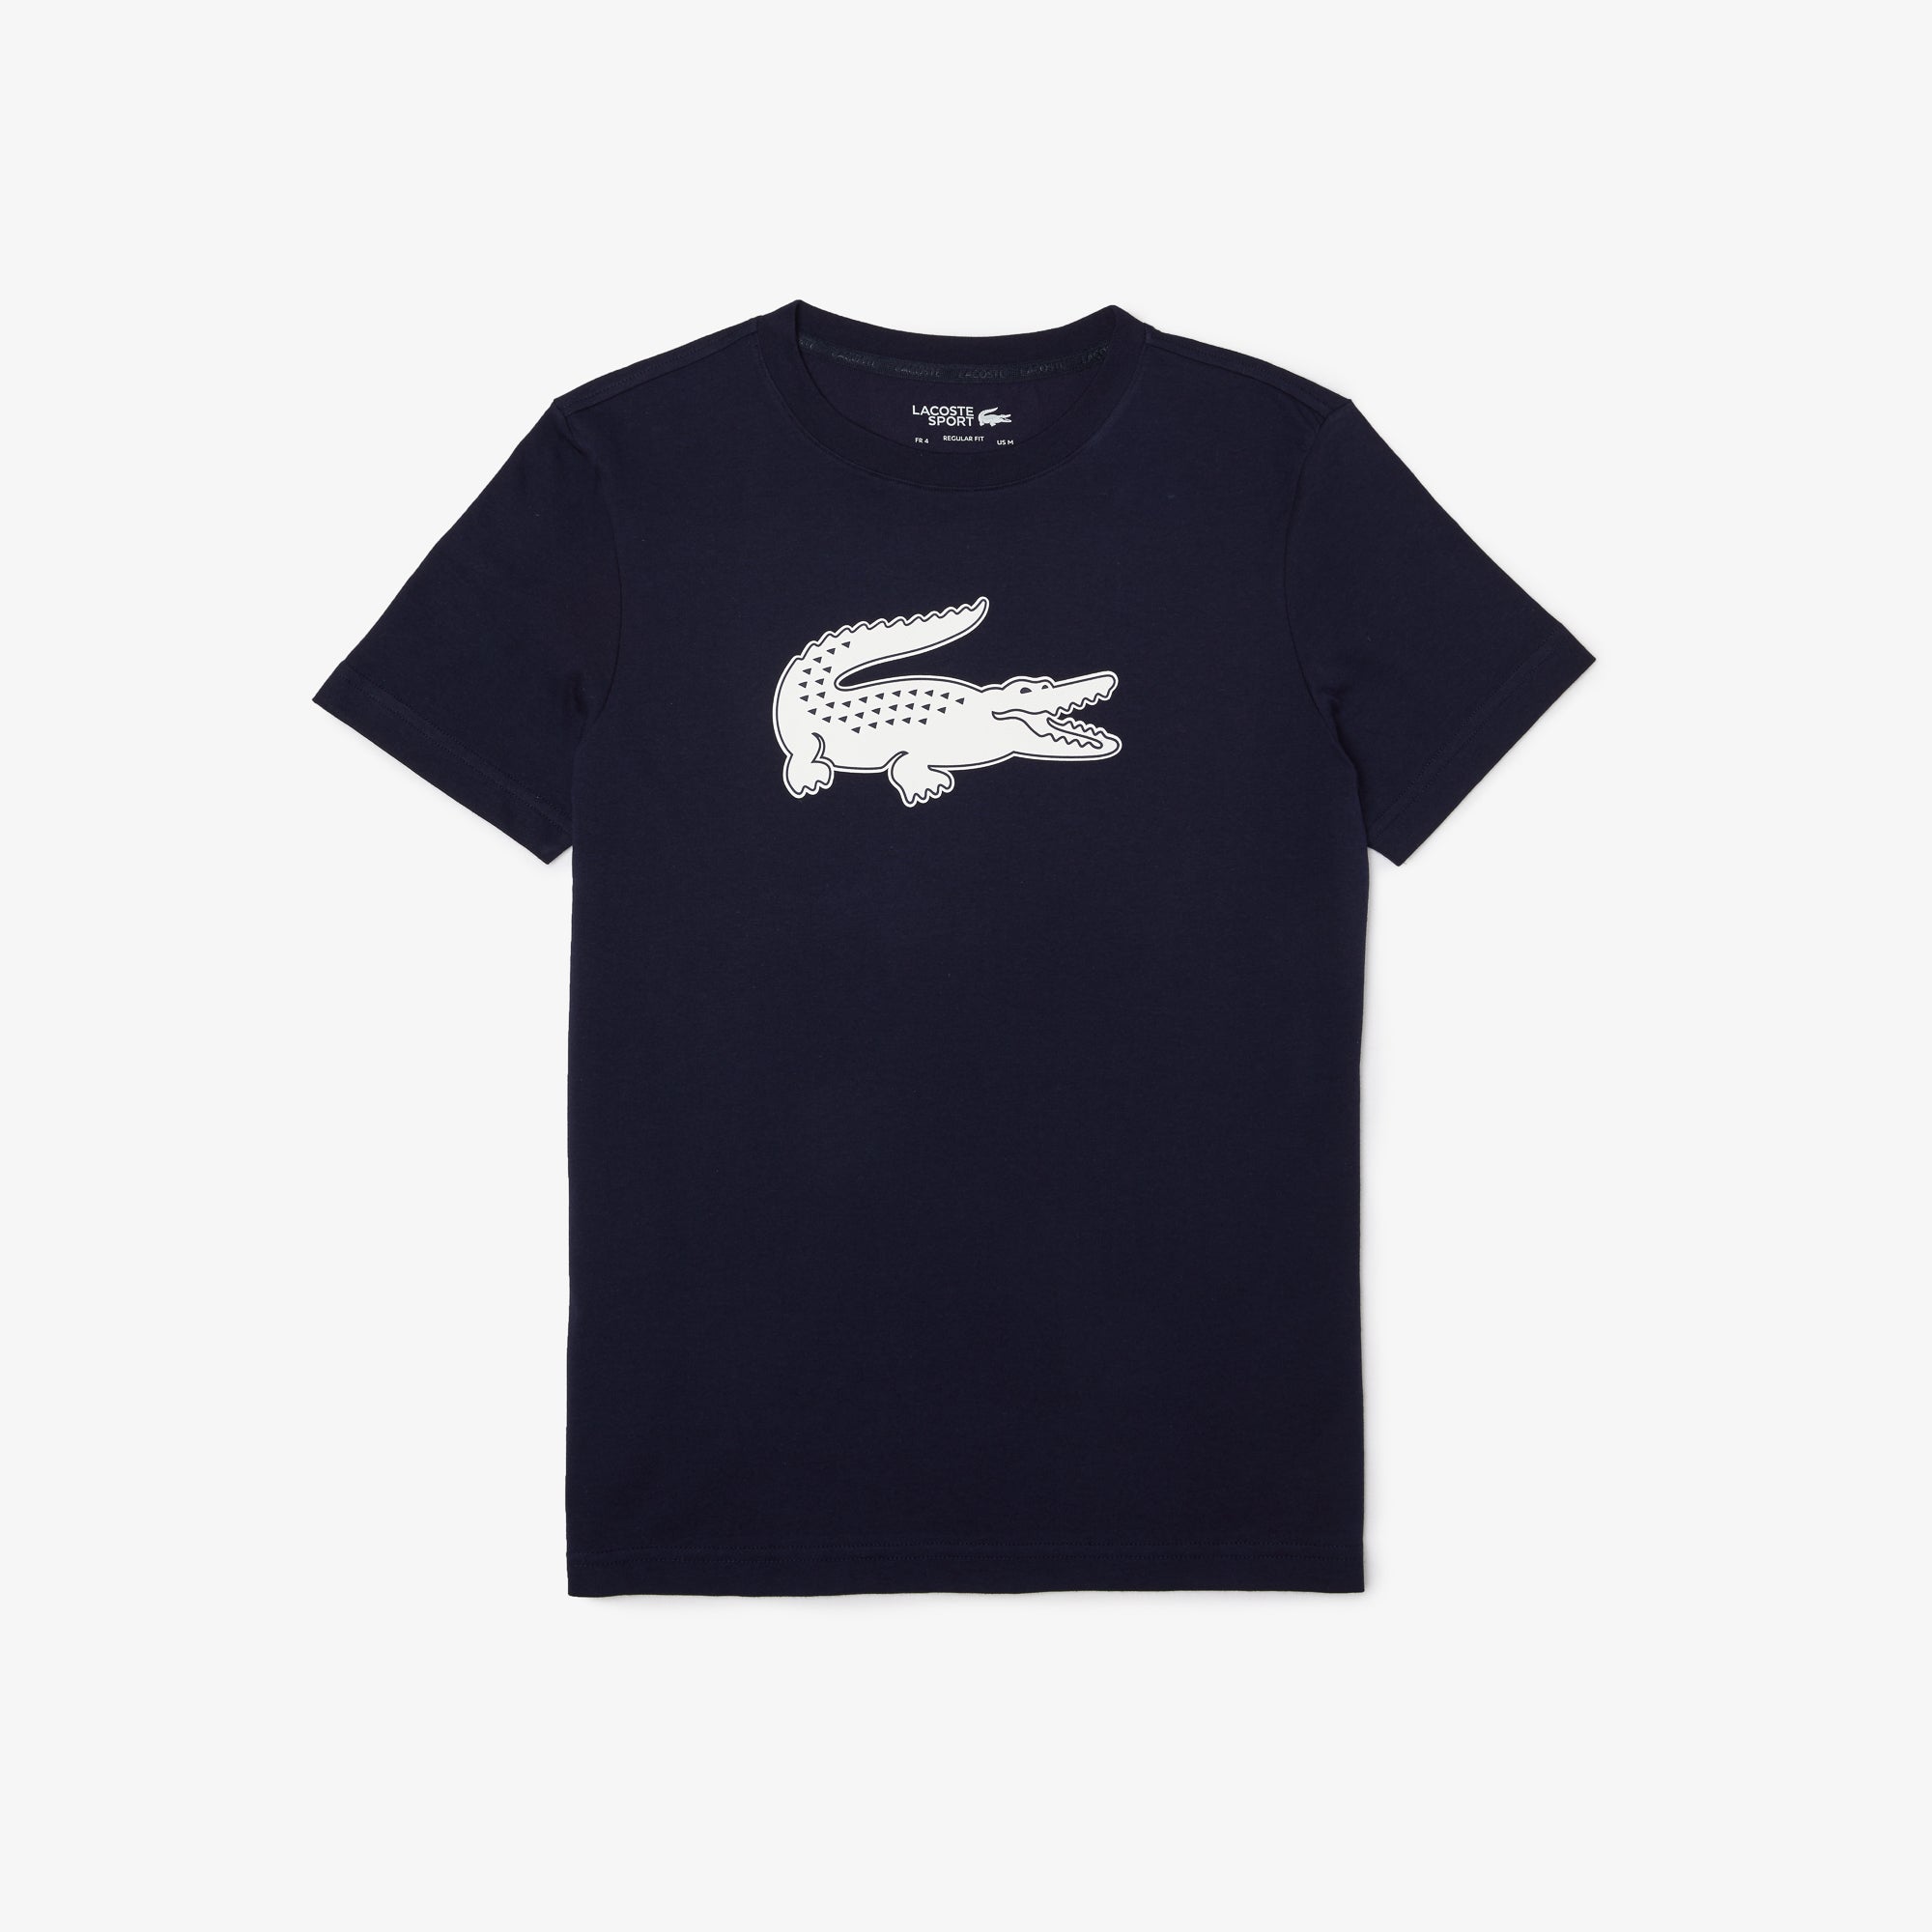 Lacoste T-shirt (Navy Blue/White) - M